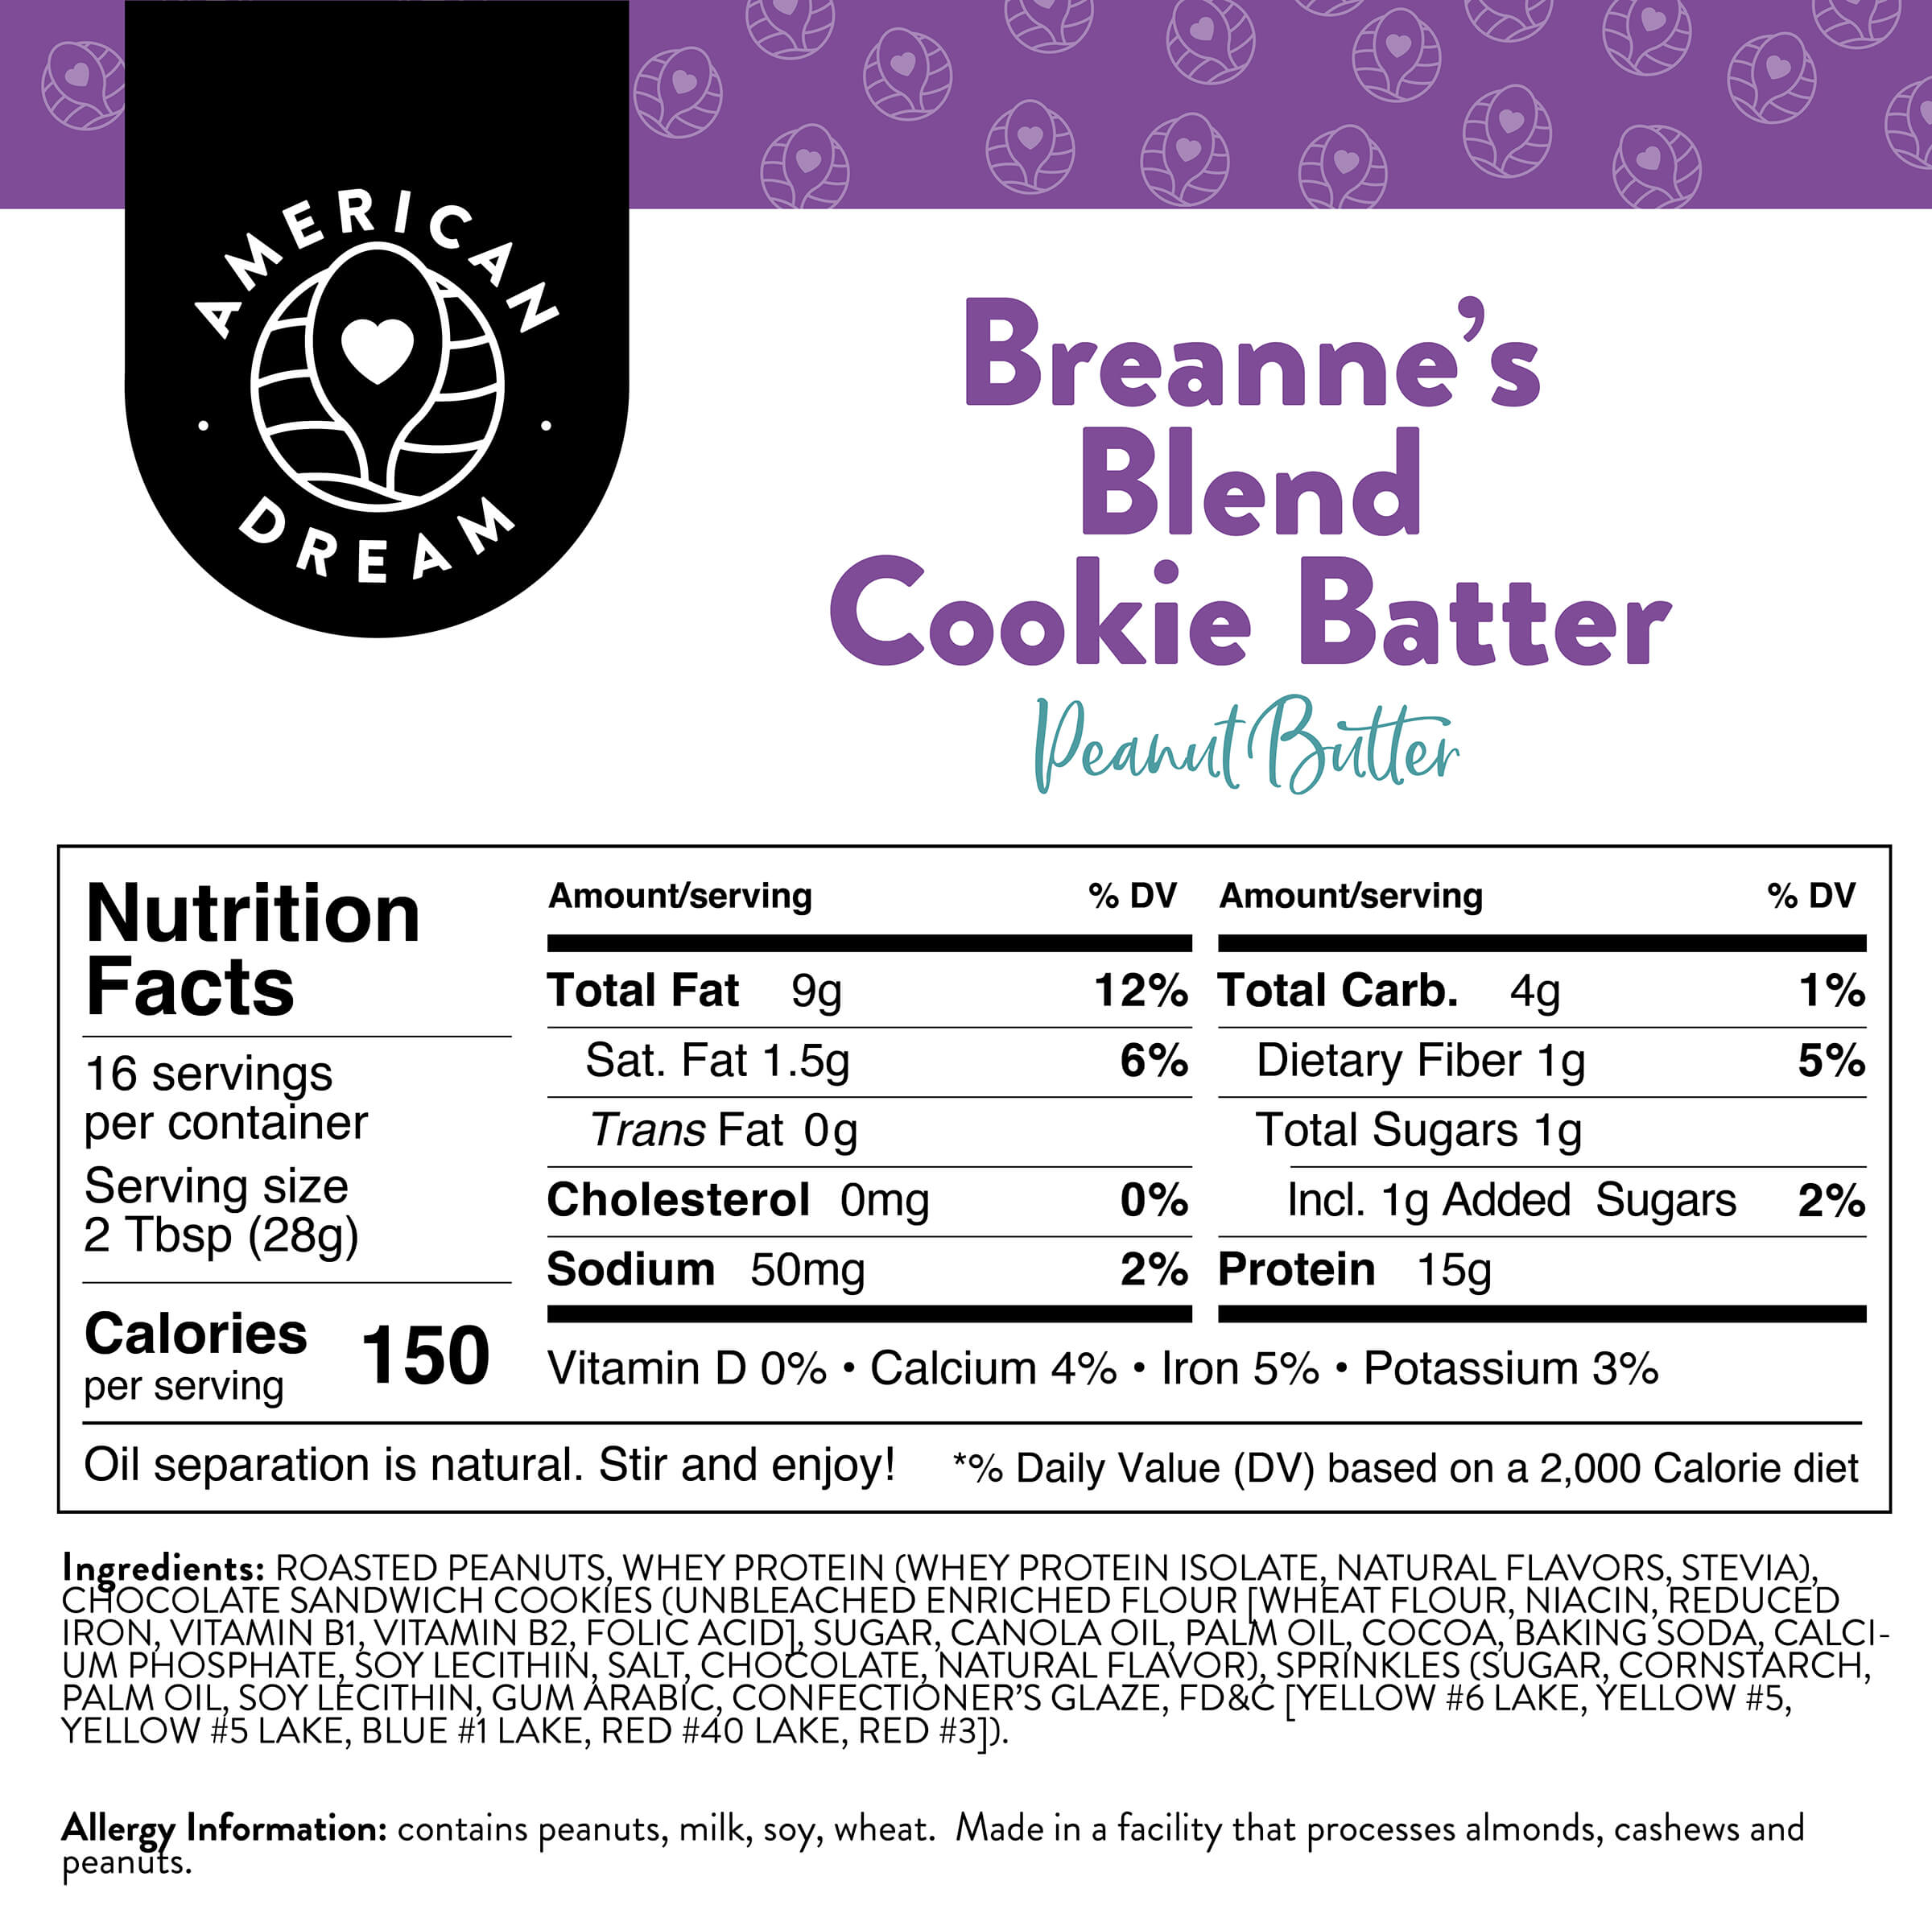 Breanne's Blend Cookie Batter Peanut Butter